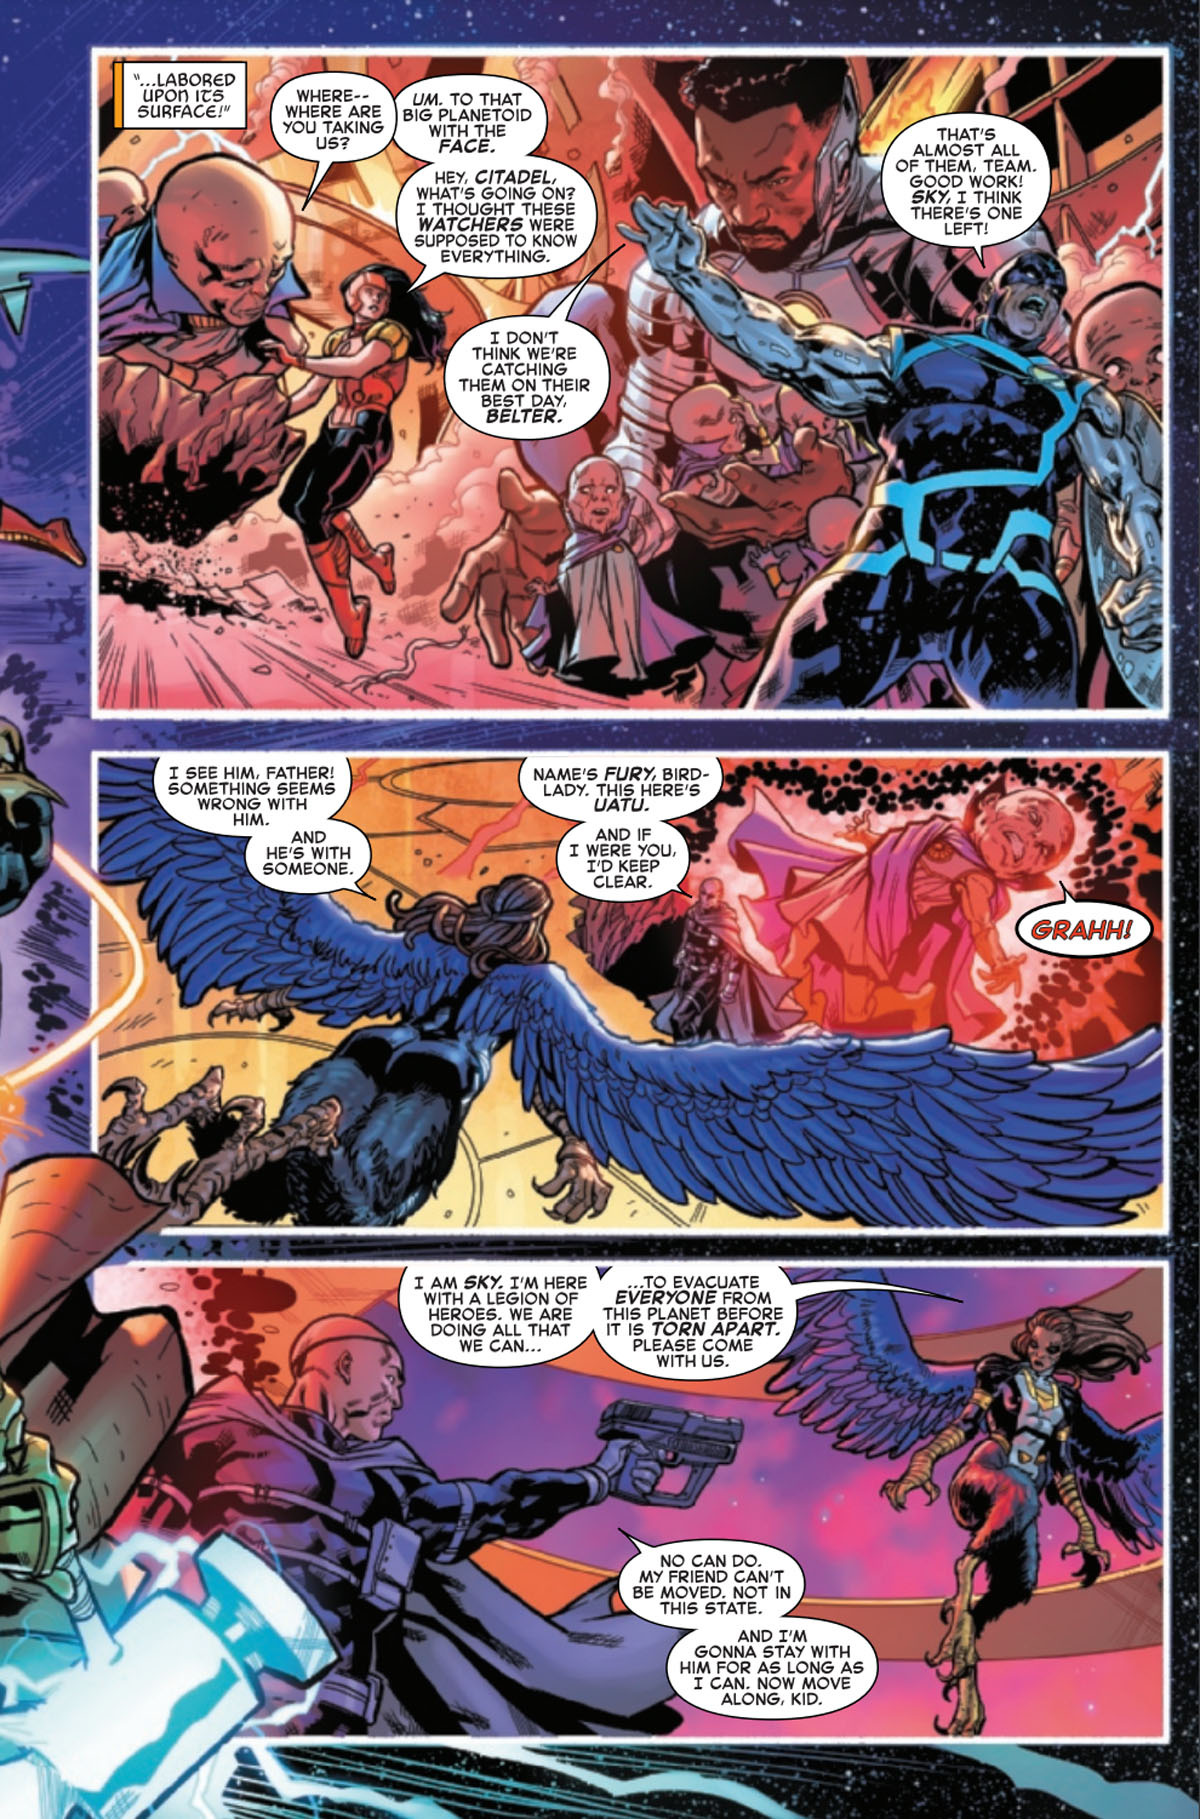 Fantastic Four #45 page 3